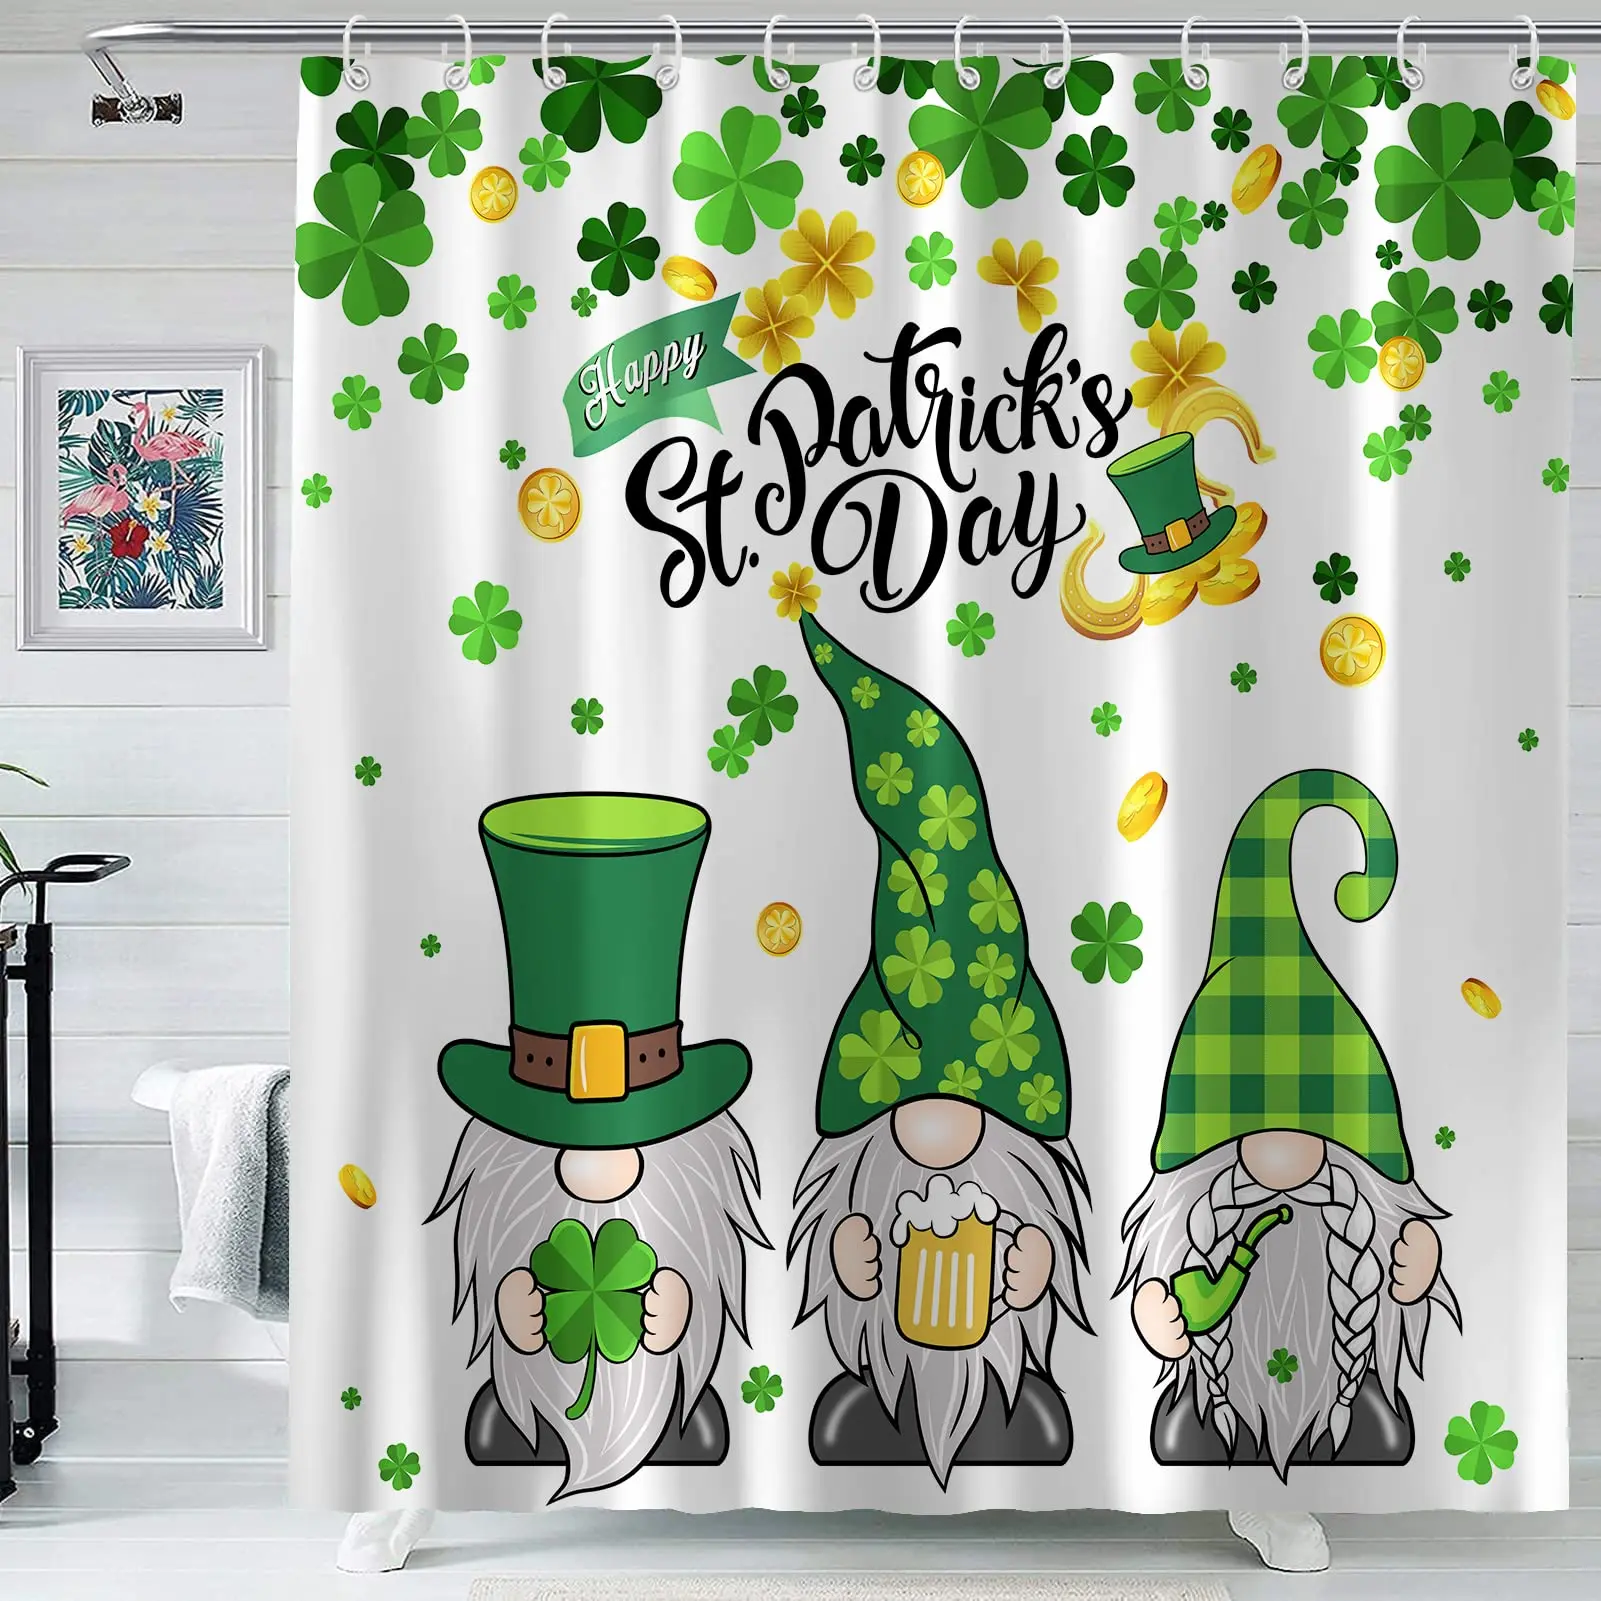 

Shower Curtain,Green Clover Shamrock Irish St Patrick's Day St. Patrick's Day Clover Shamrock Bathroom Curtains,Fabric Bath Sets